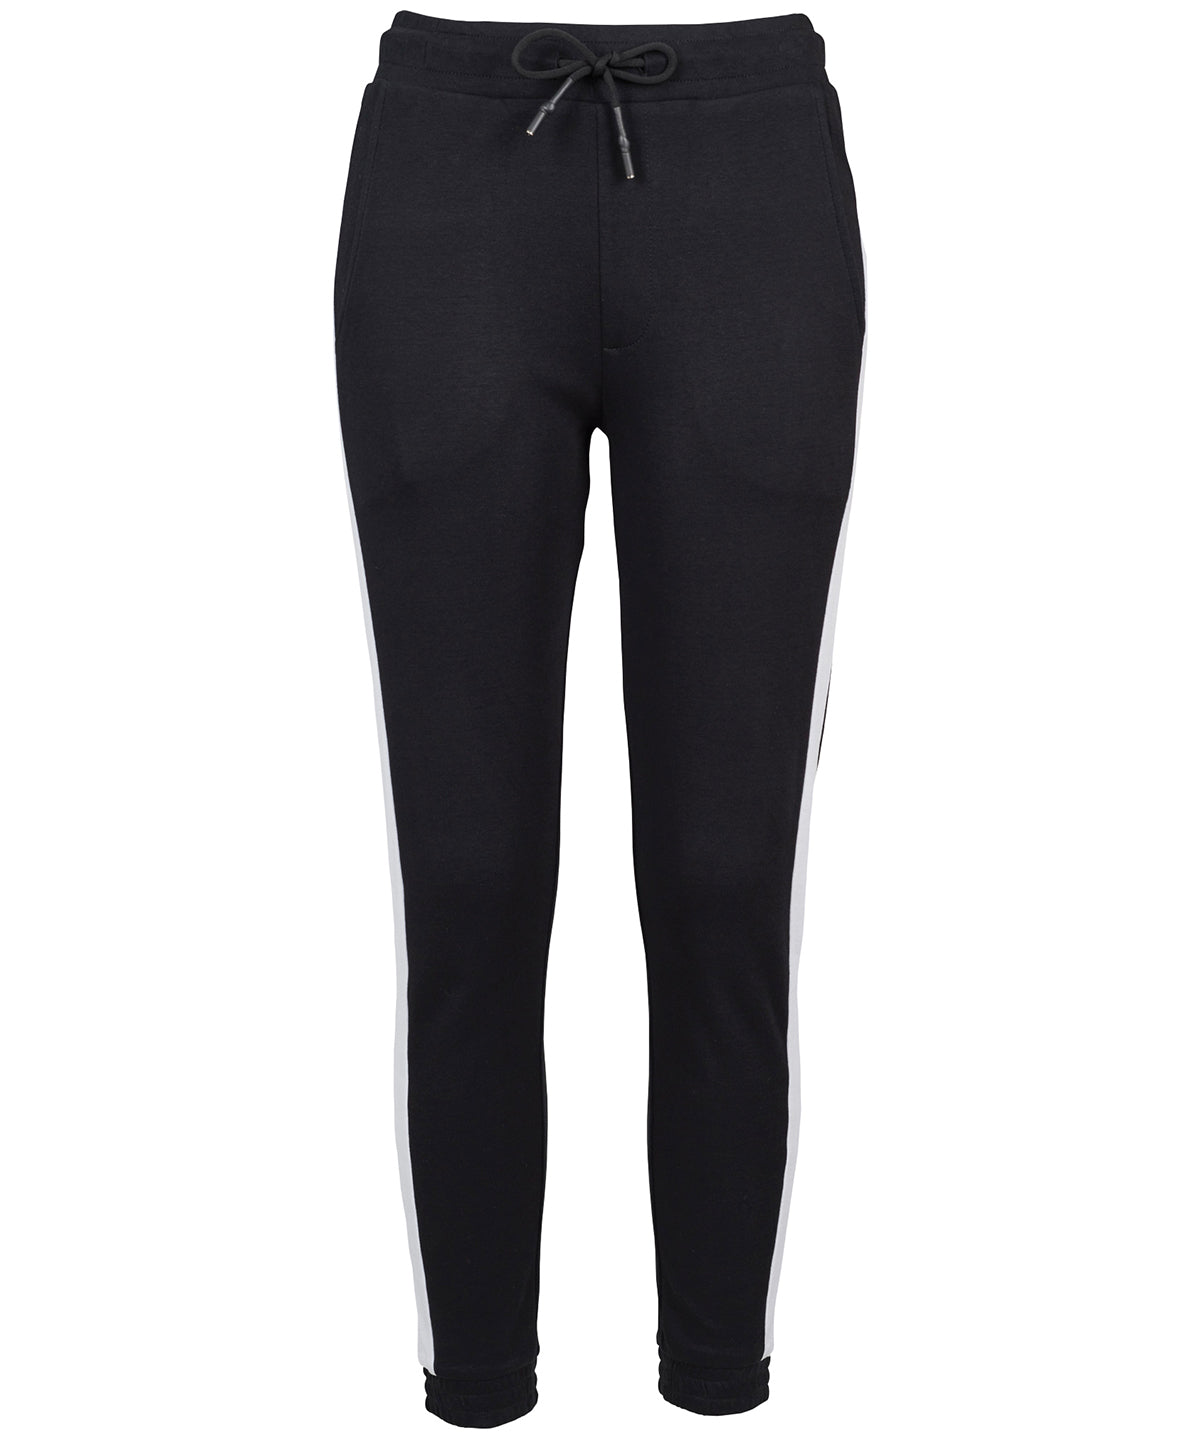 Personalised Sweatpants - Black Build Your Brand Women's interlock jog pants